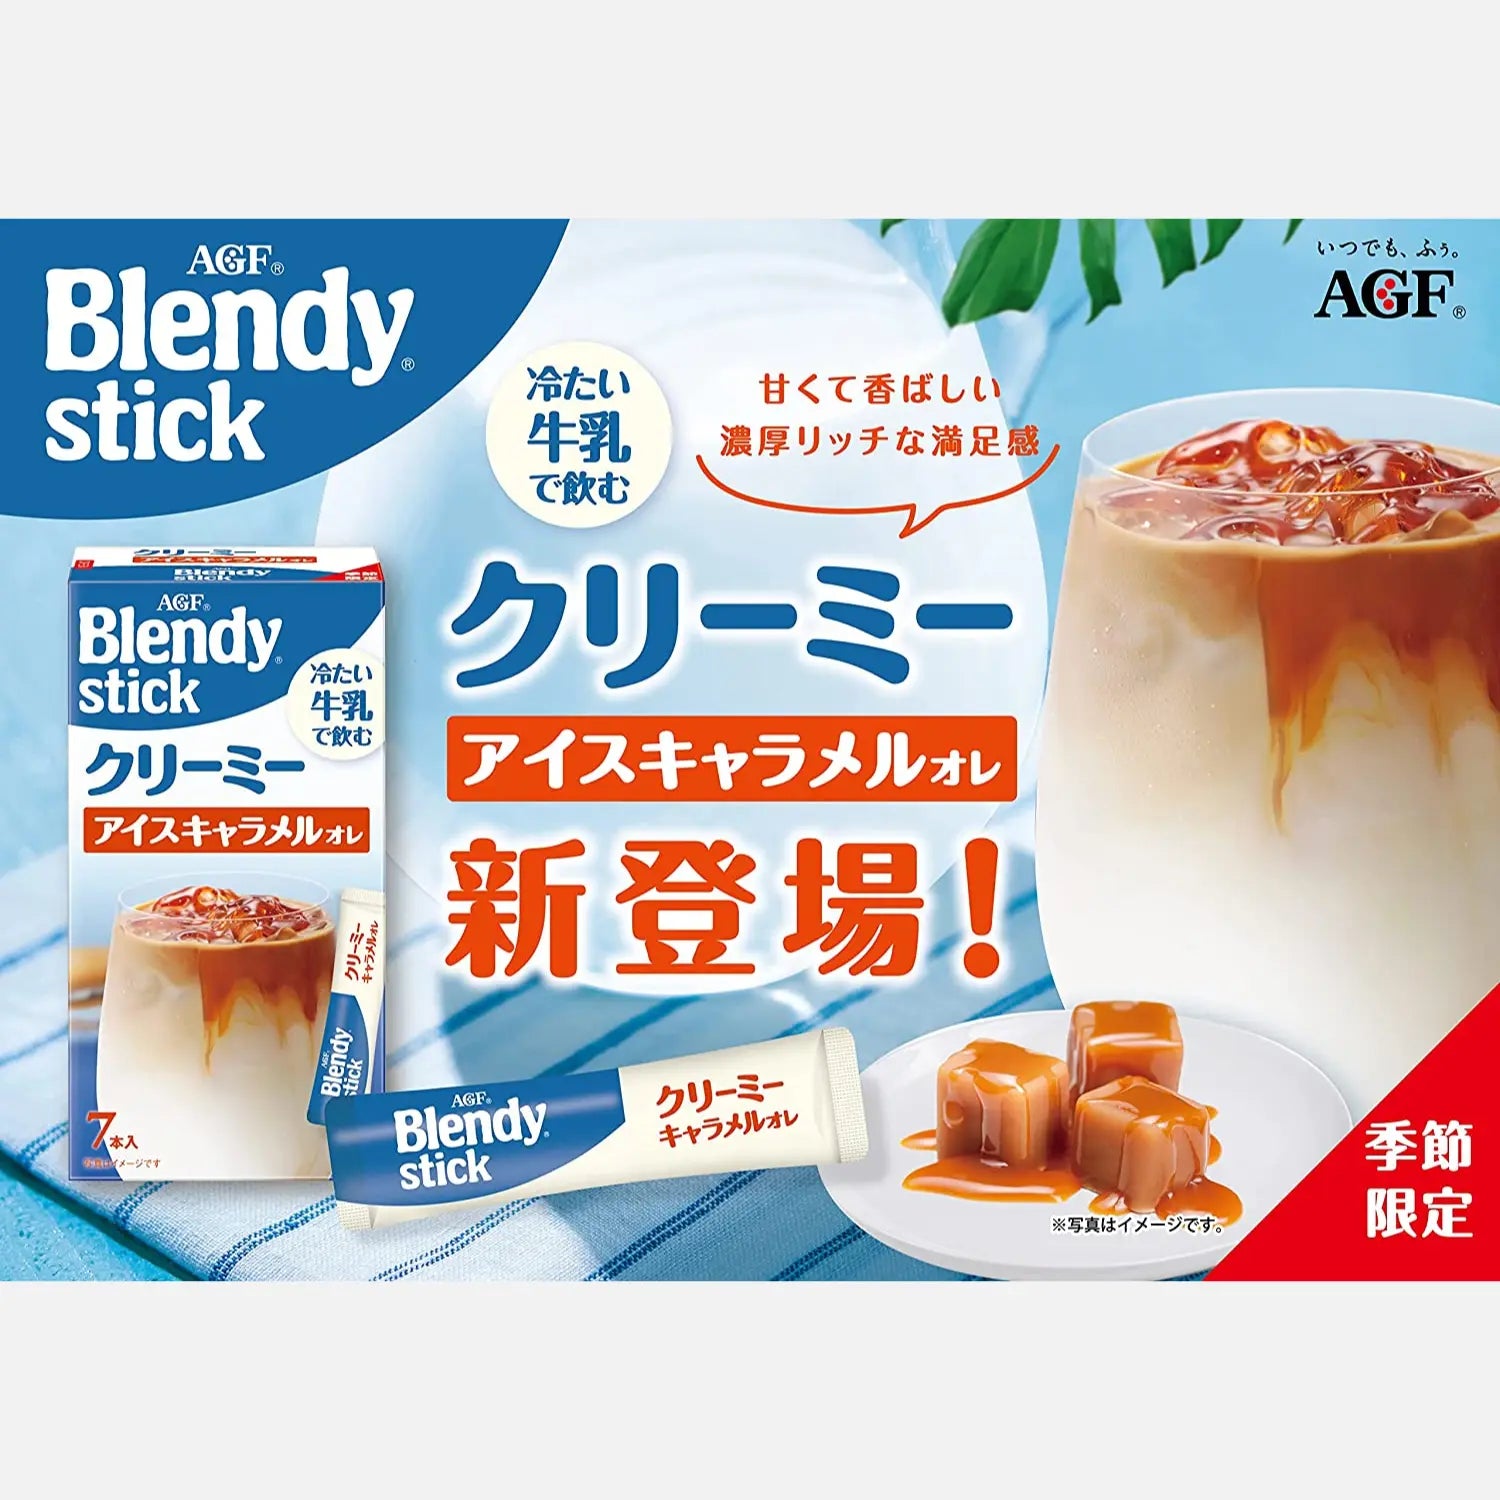 Blendy Stick Creamy Ice Caramel Au Lait 6.5g (Pack of 7) - Buy Me Japan